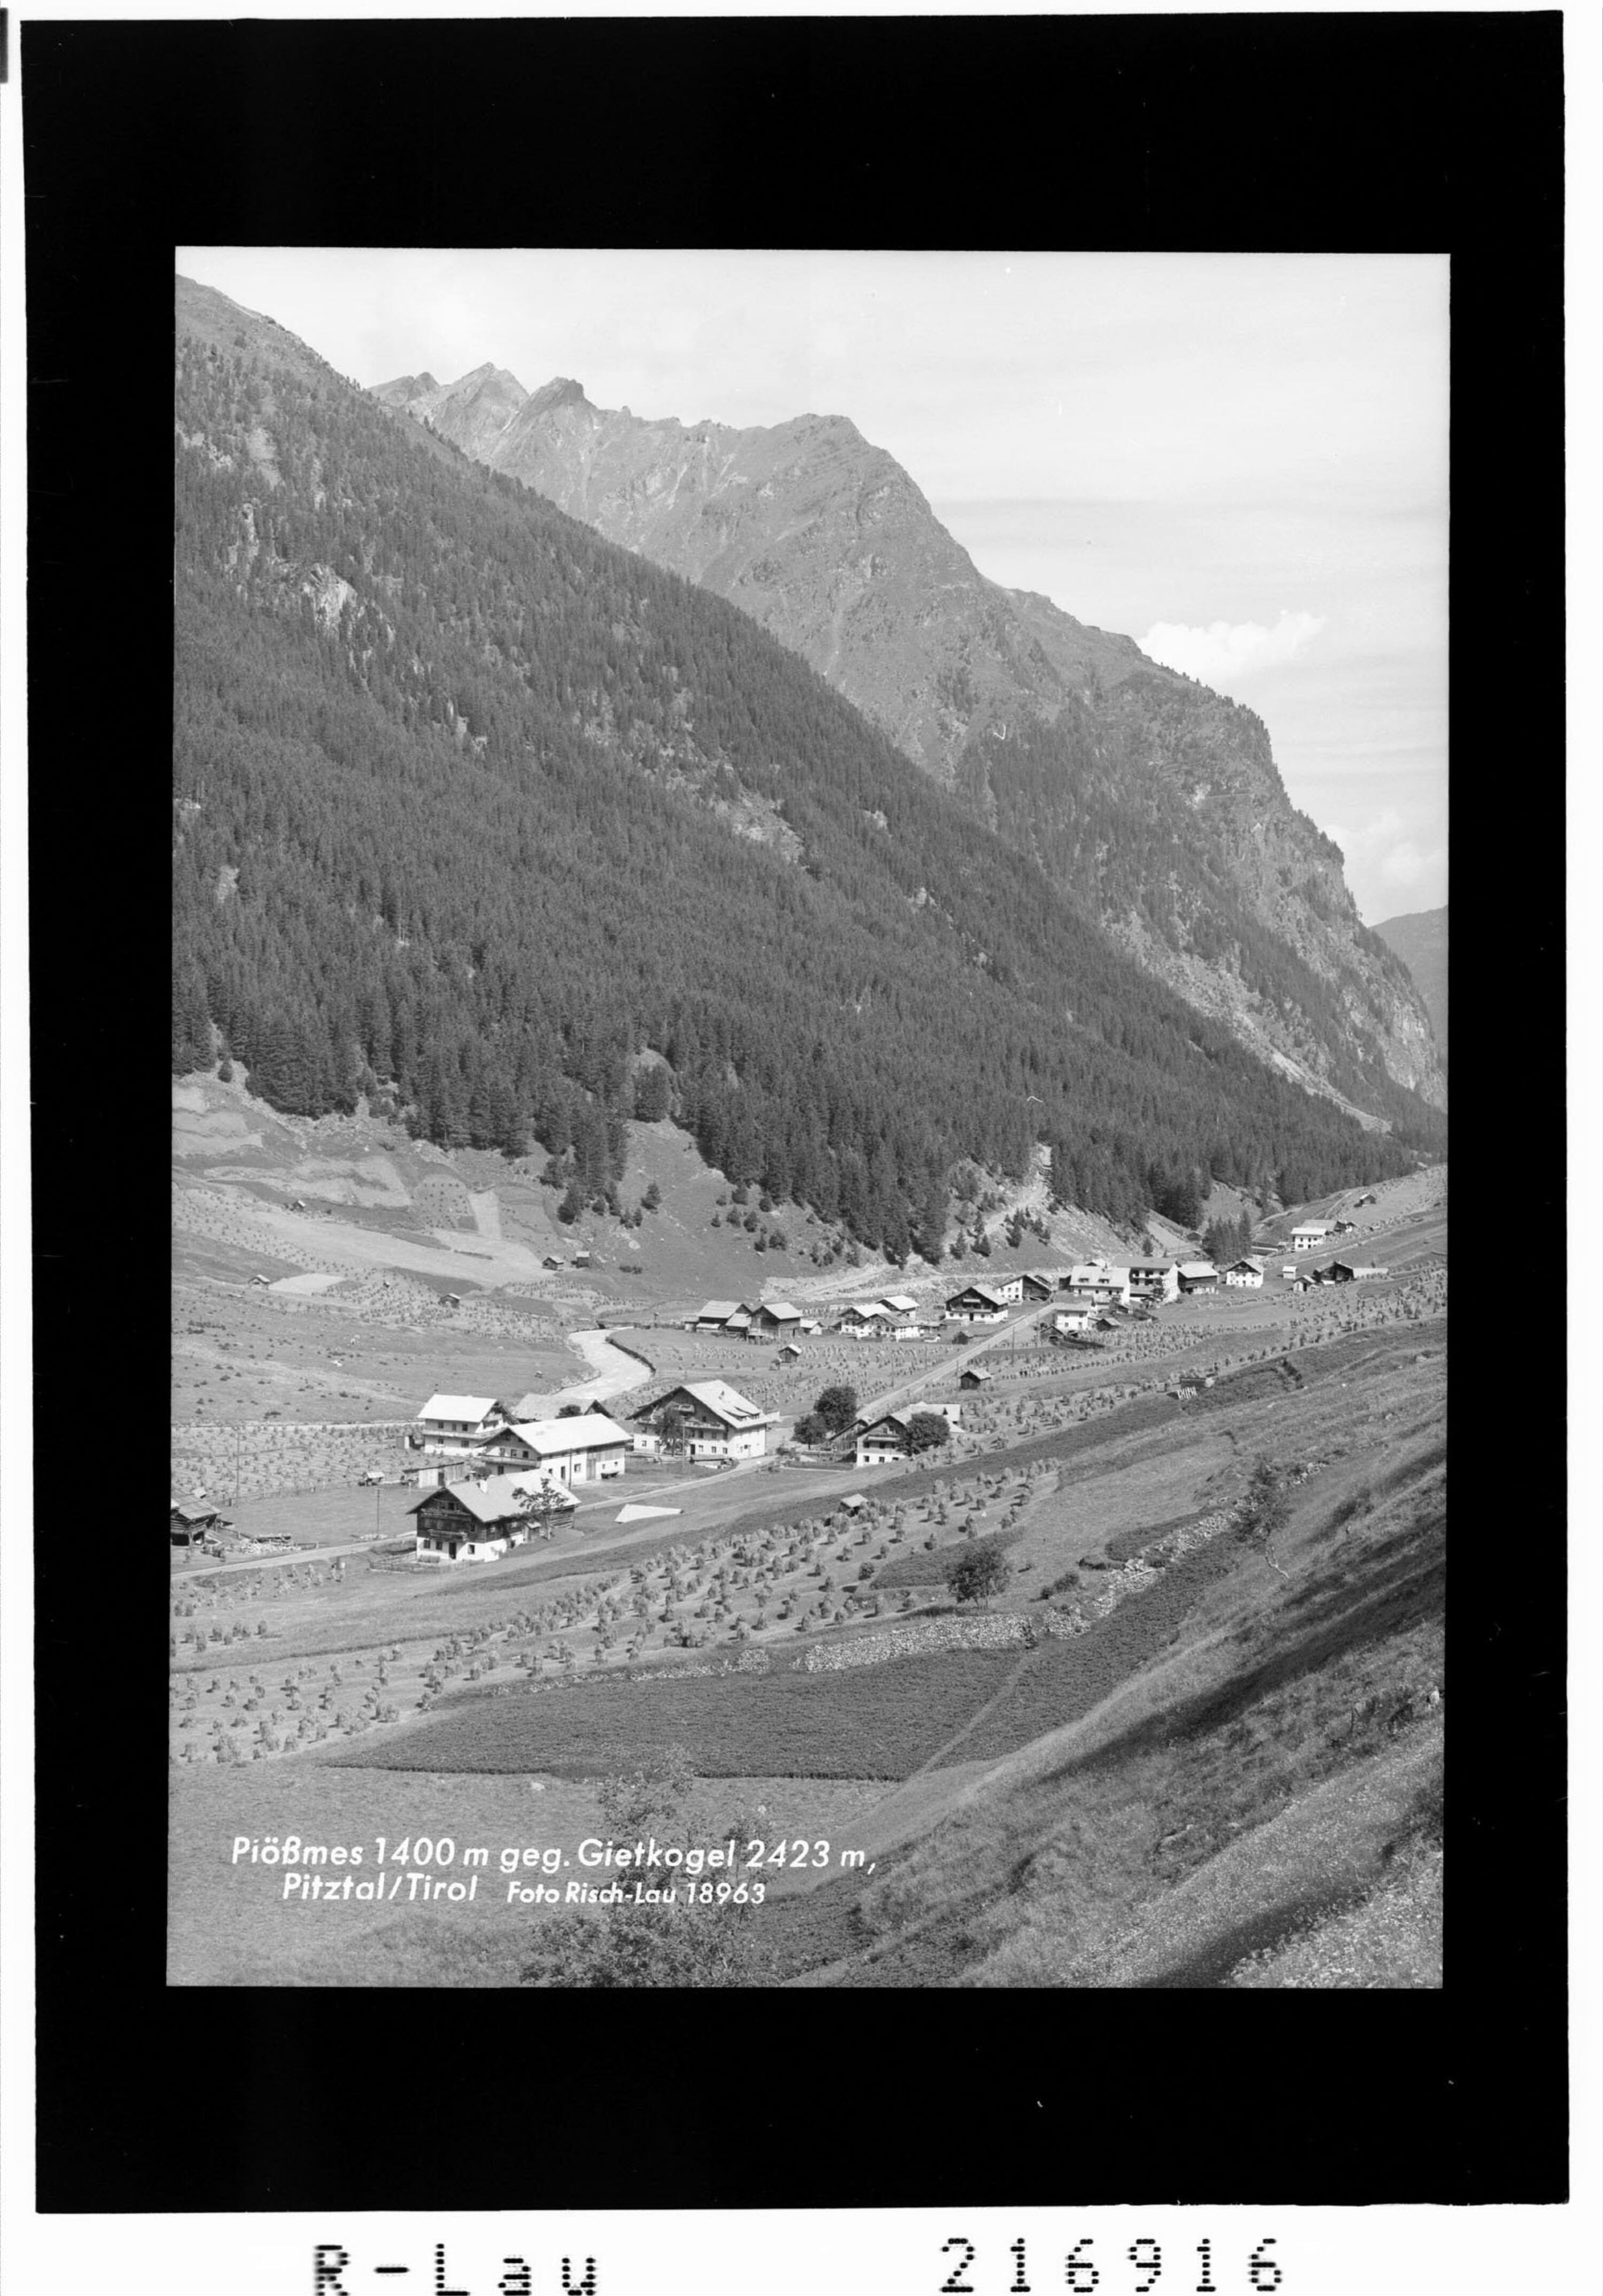 St.Leonhard - Piössmes 1400 m gegen Gietkogel 2434 m, Pitztal / Tirol></div>


    <hr>
    <div class=